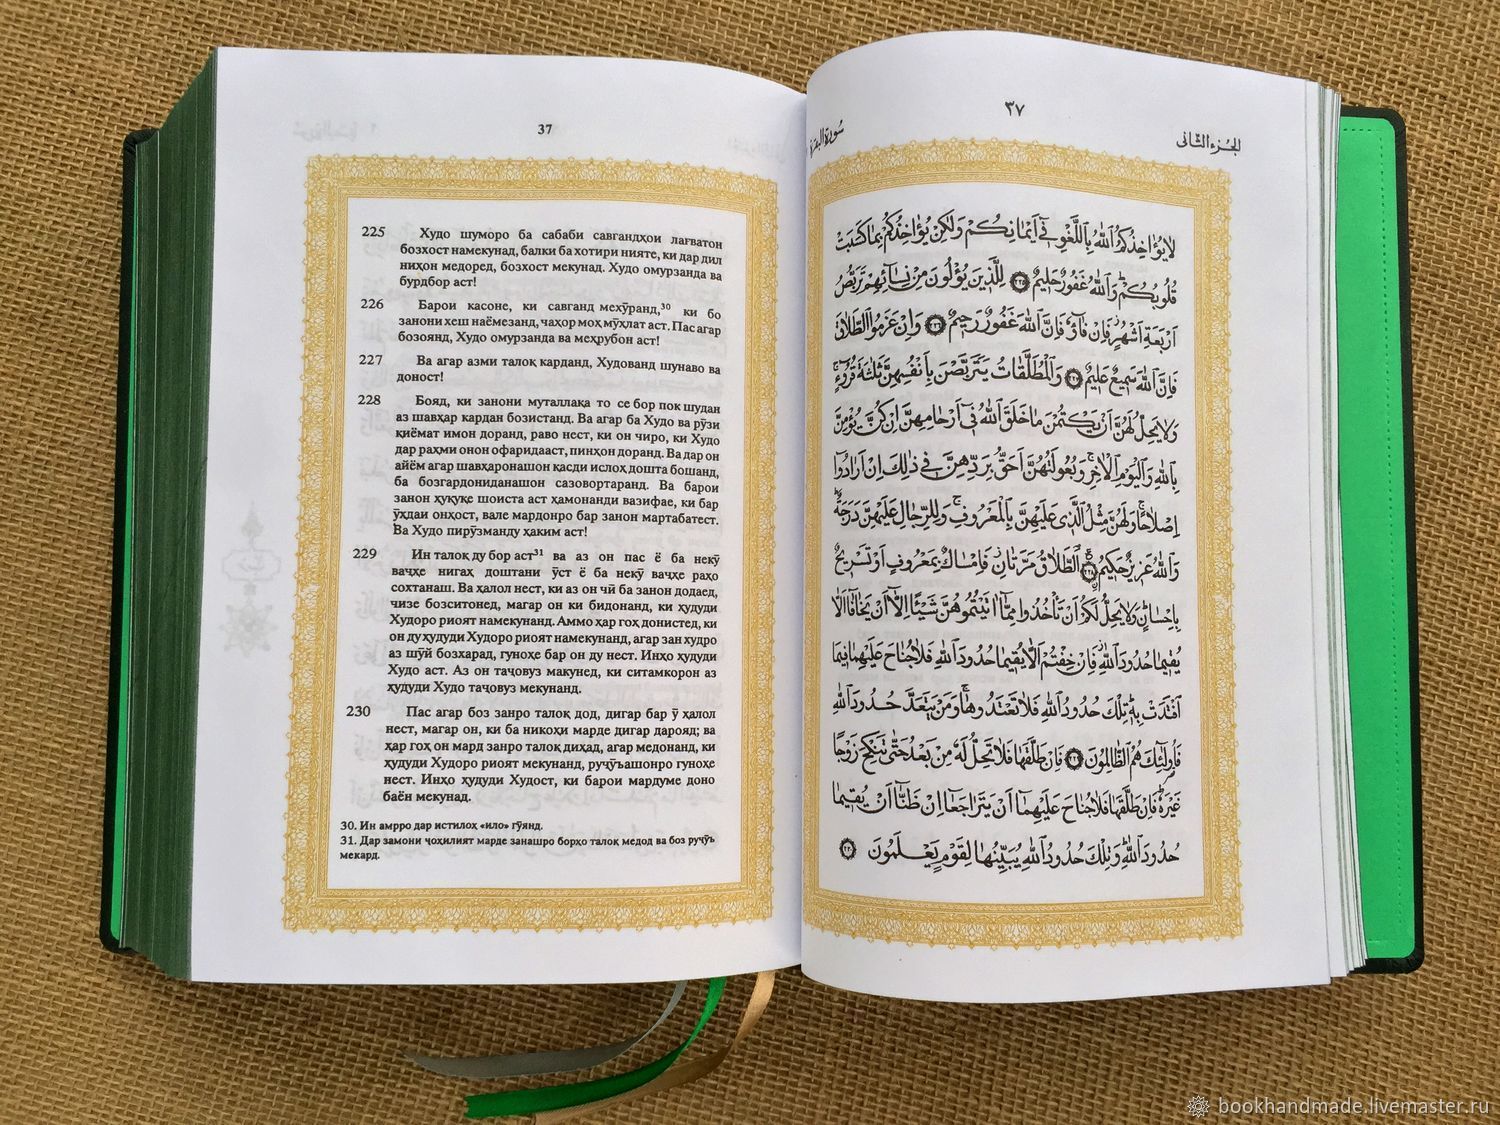 Читать про коран. Книга "Коран". Книга Коран на русском языке. Книги на арабском языке. Коран книга на арабском.